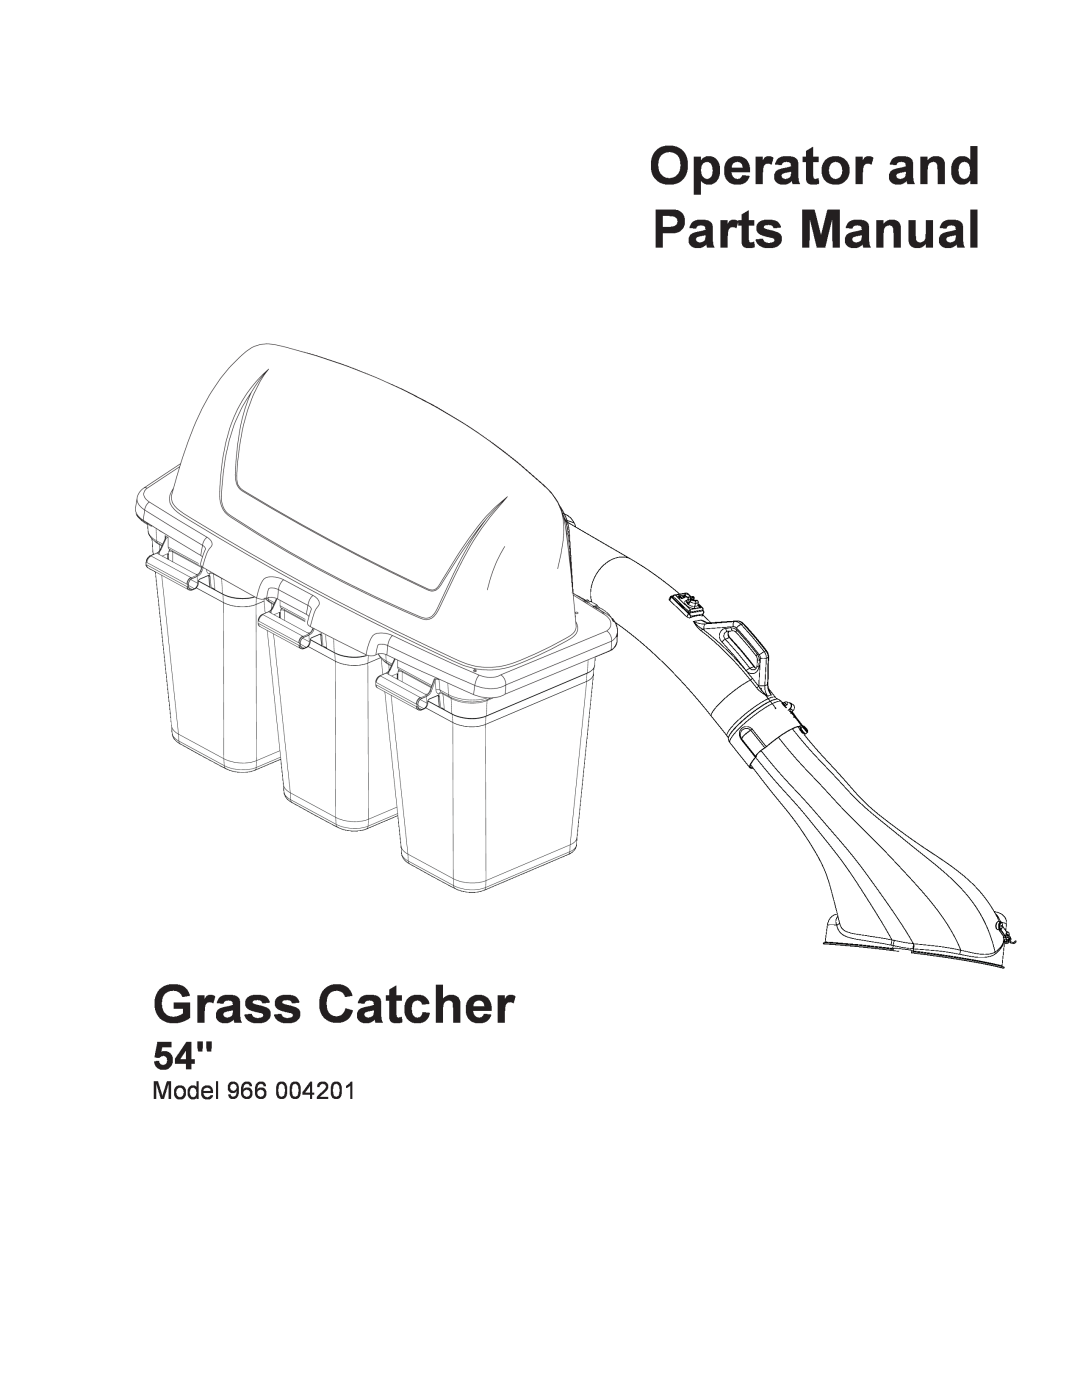 Dixon 966 004201 manual Operator and Parts Manual Grass Catcher, Model 